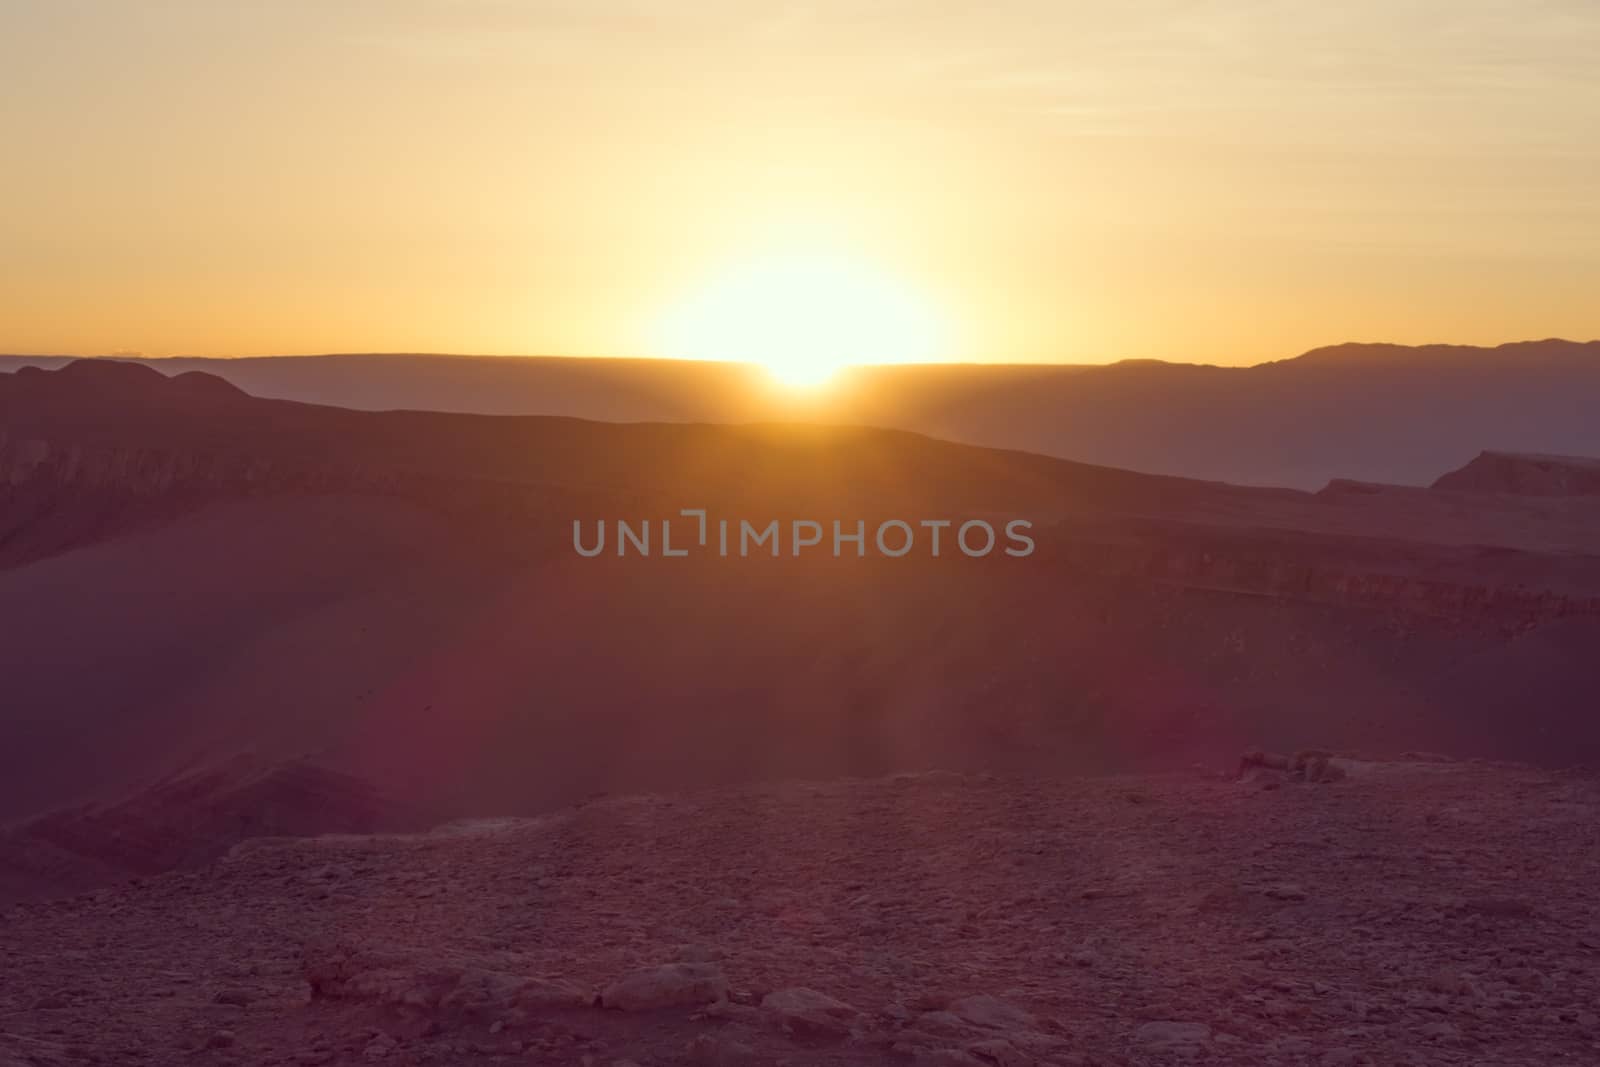 Valle de la Luna at sunset in San Pedro de Atacama, Chile by daboost